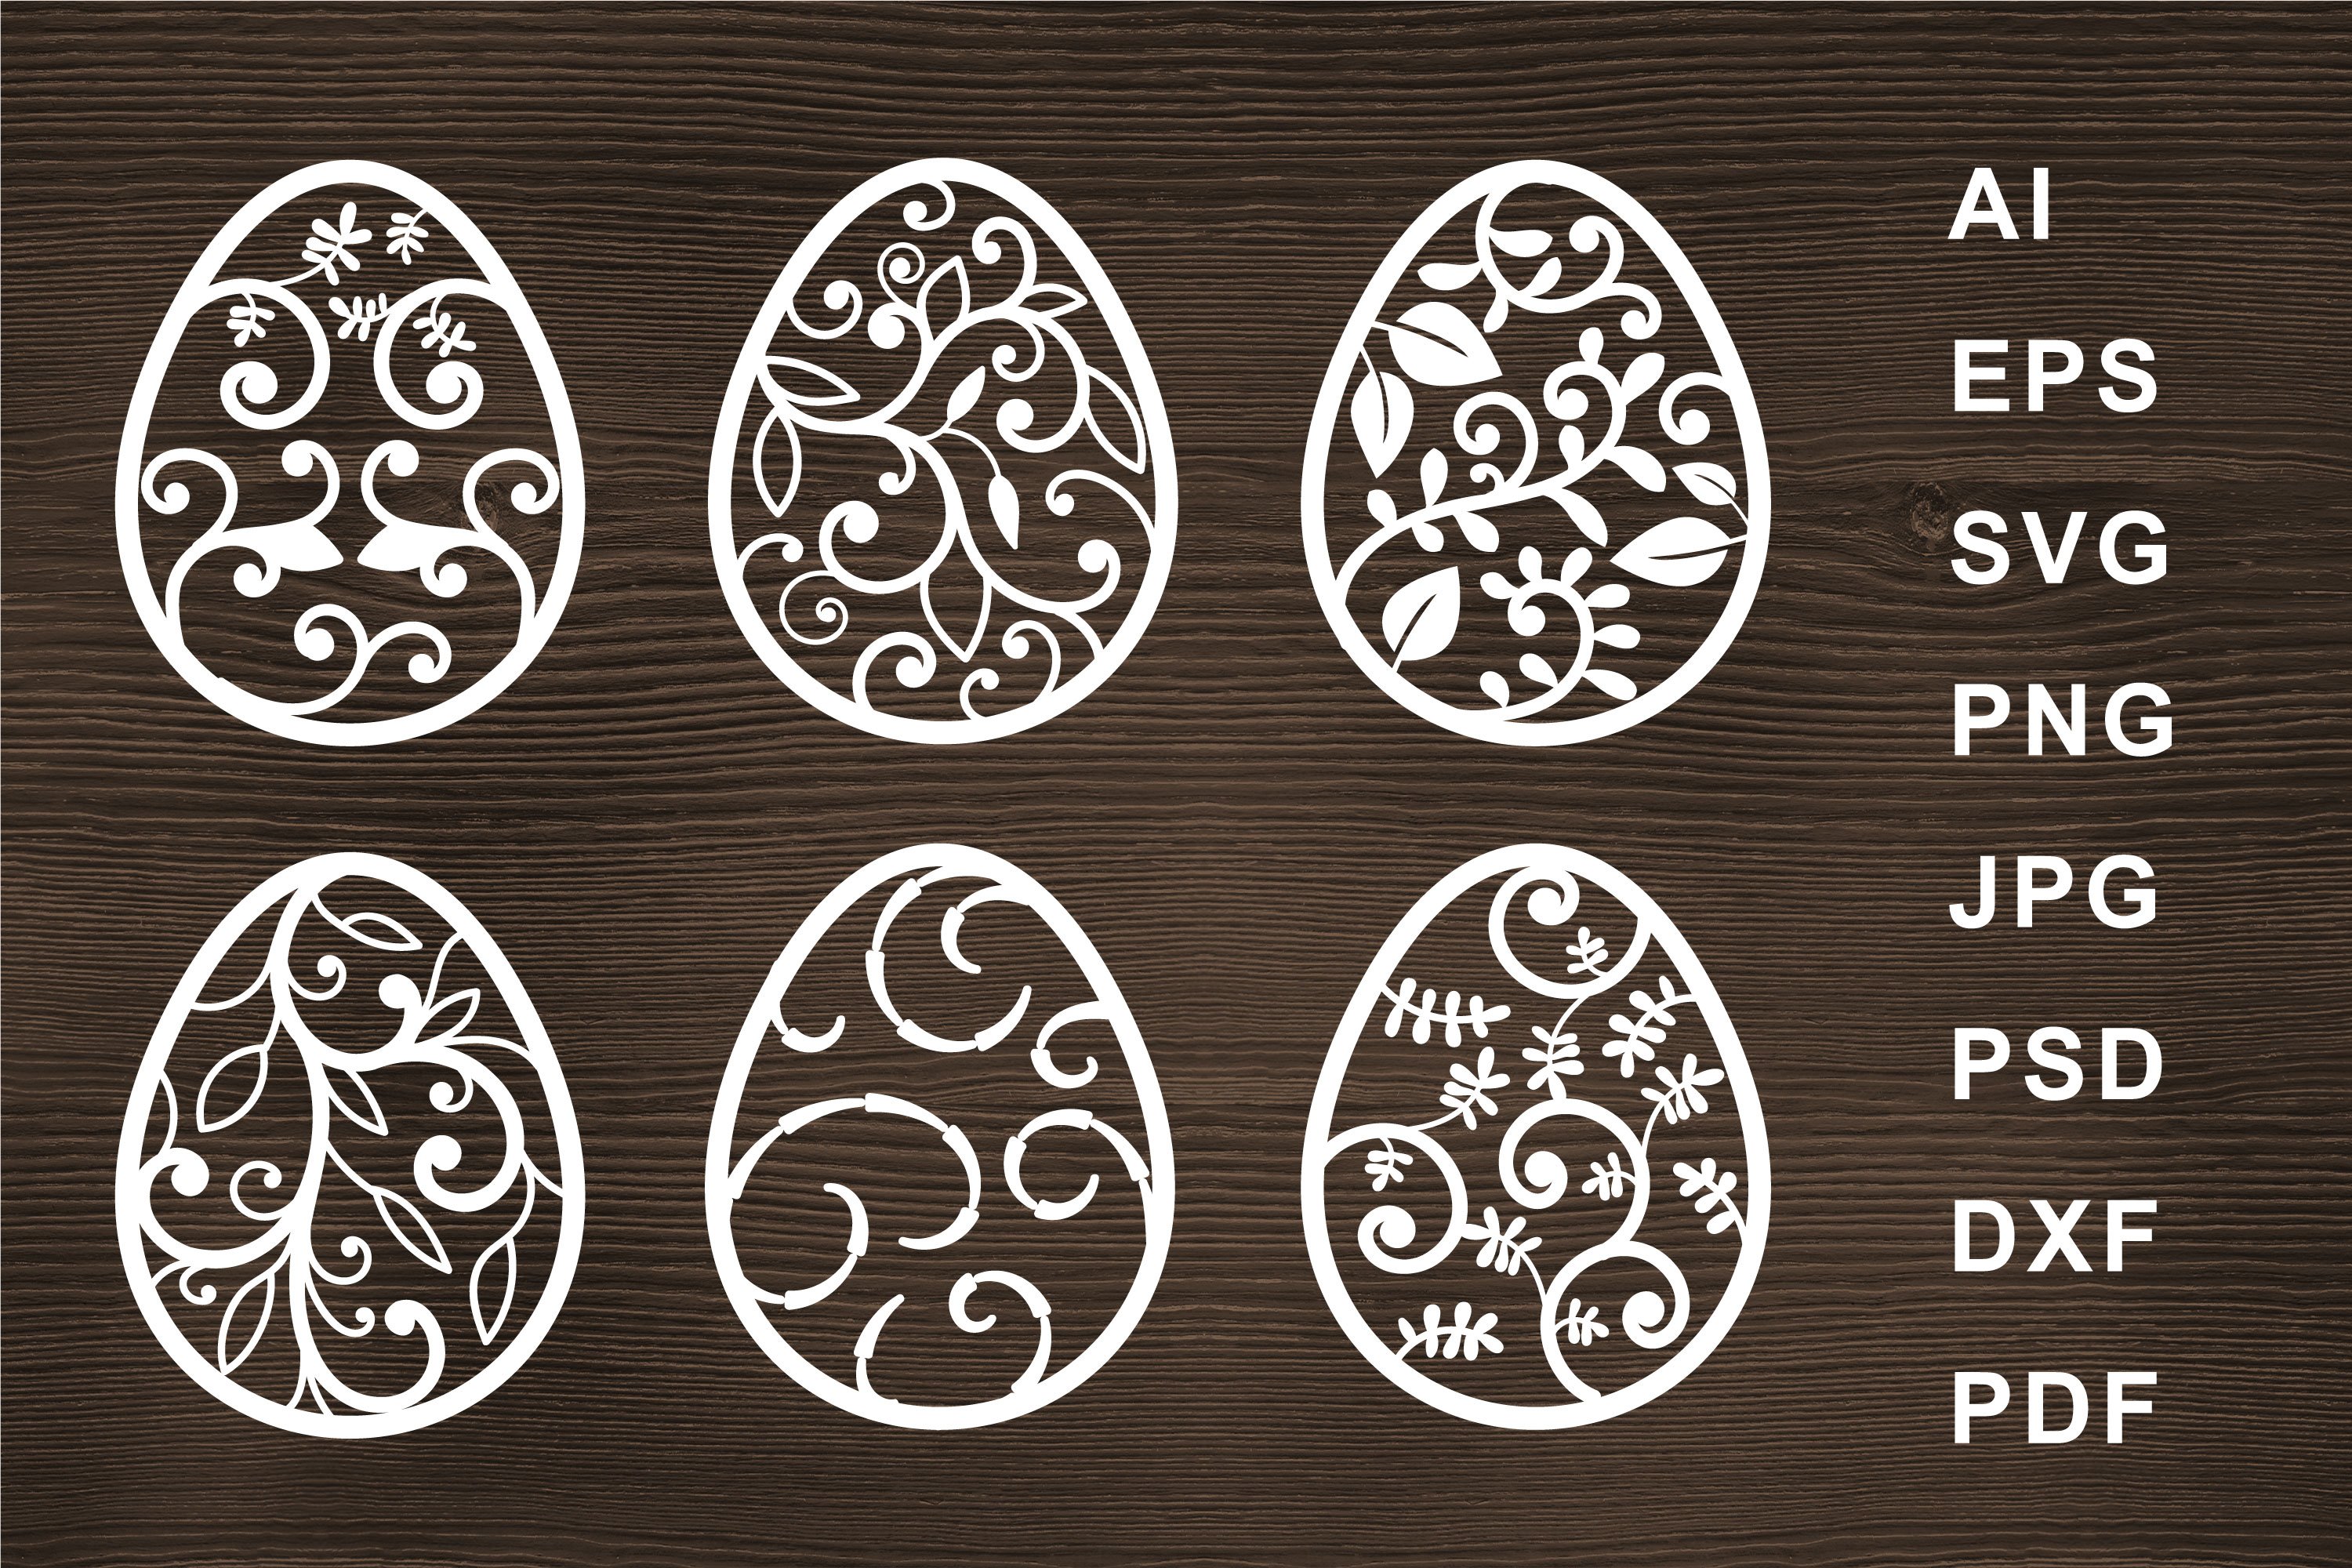 White eggs on the dark wooden background.